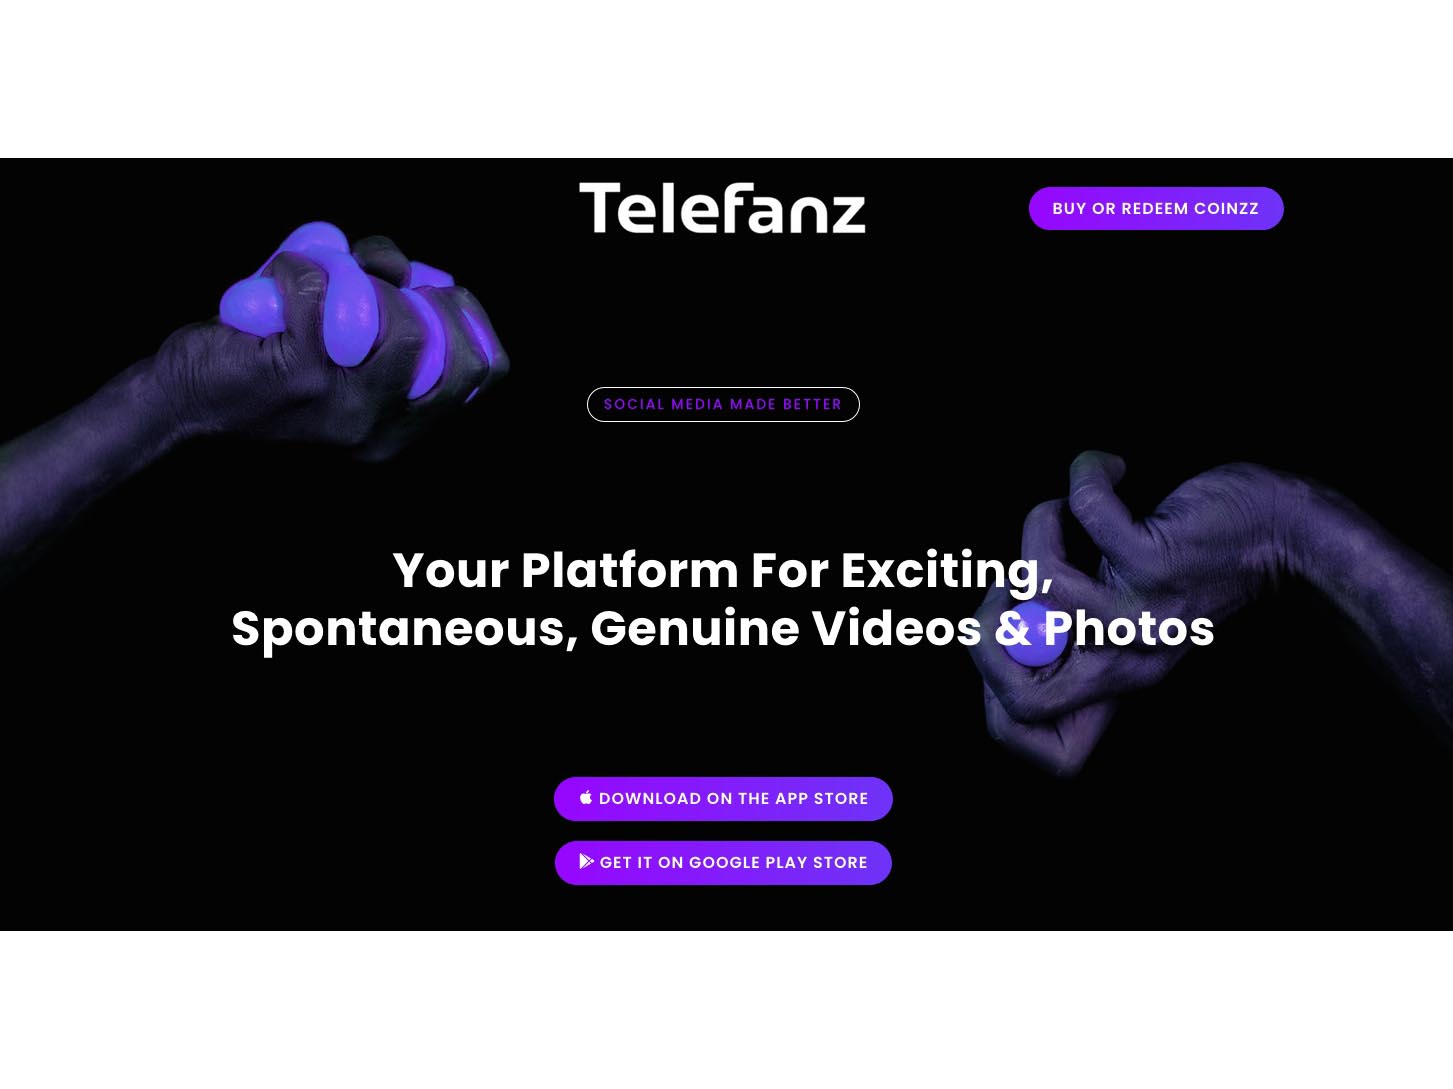 Telefanz launches as TikTok rival